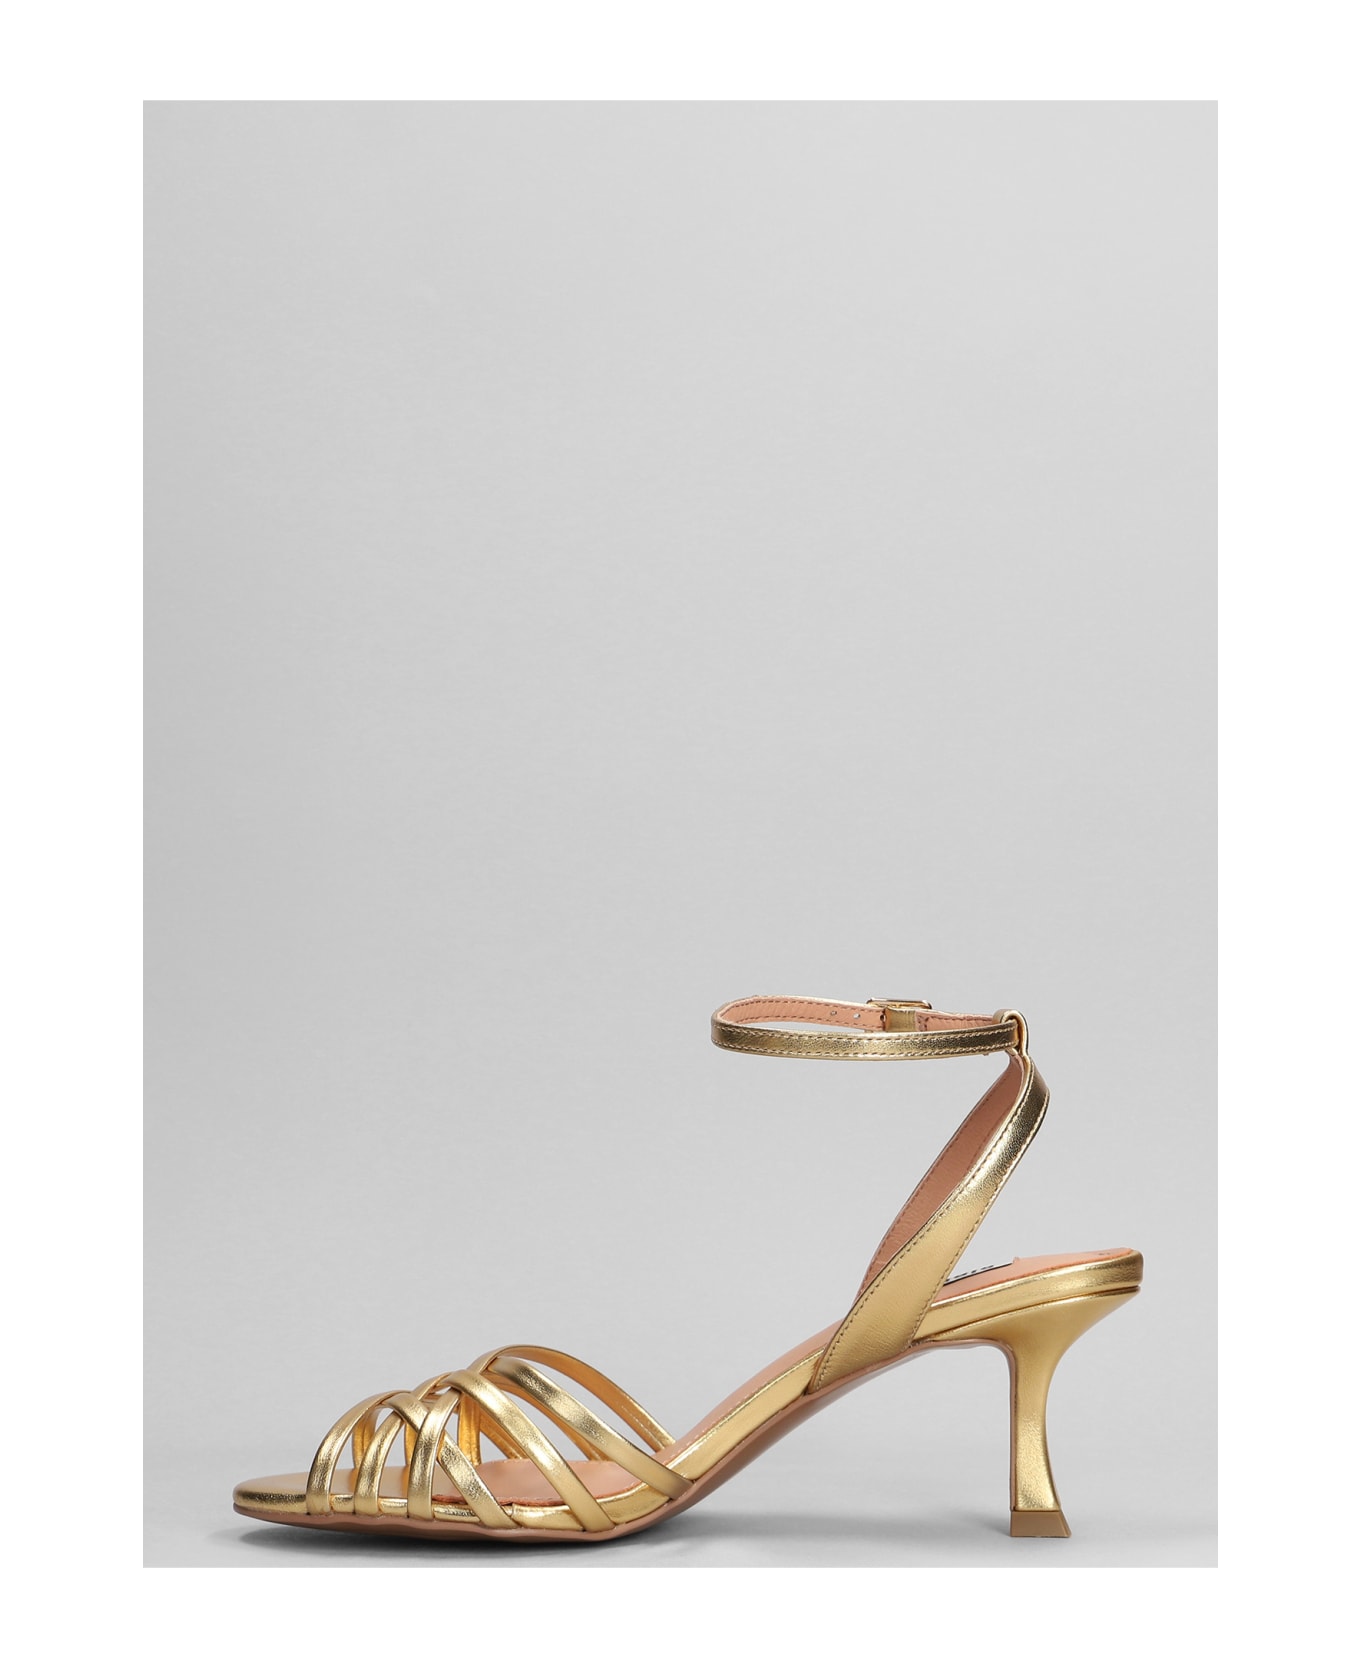 Bibi Lou Kassia 65 Sandals In Gold Leather - gold